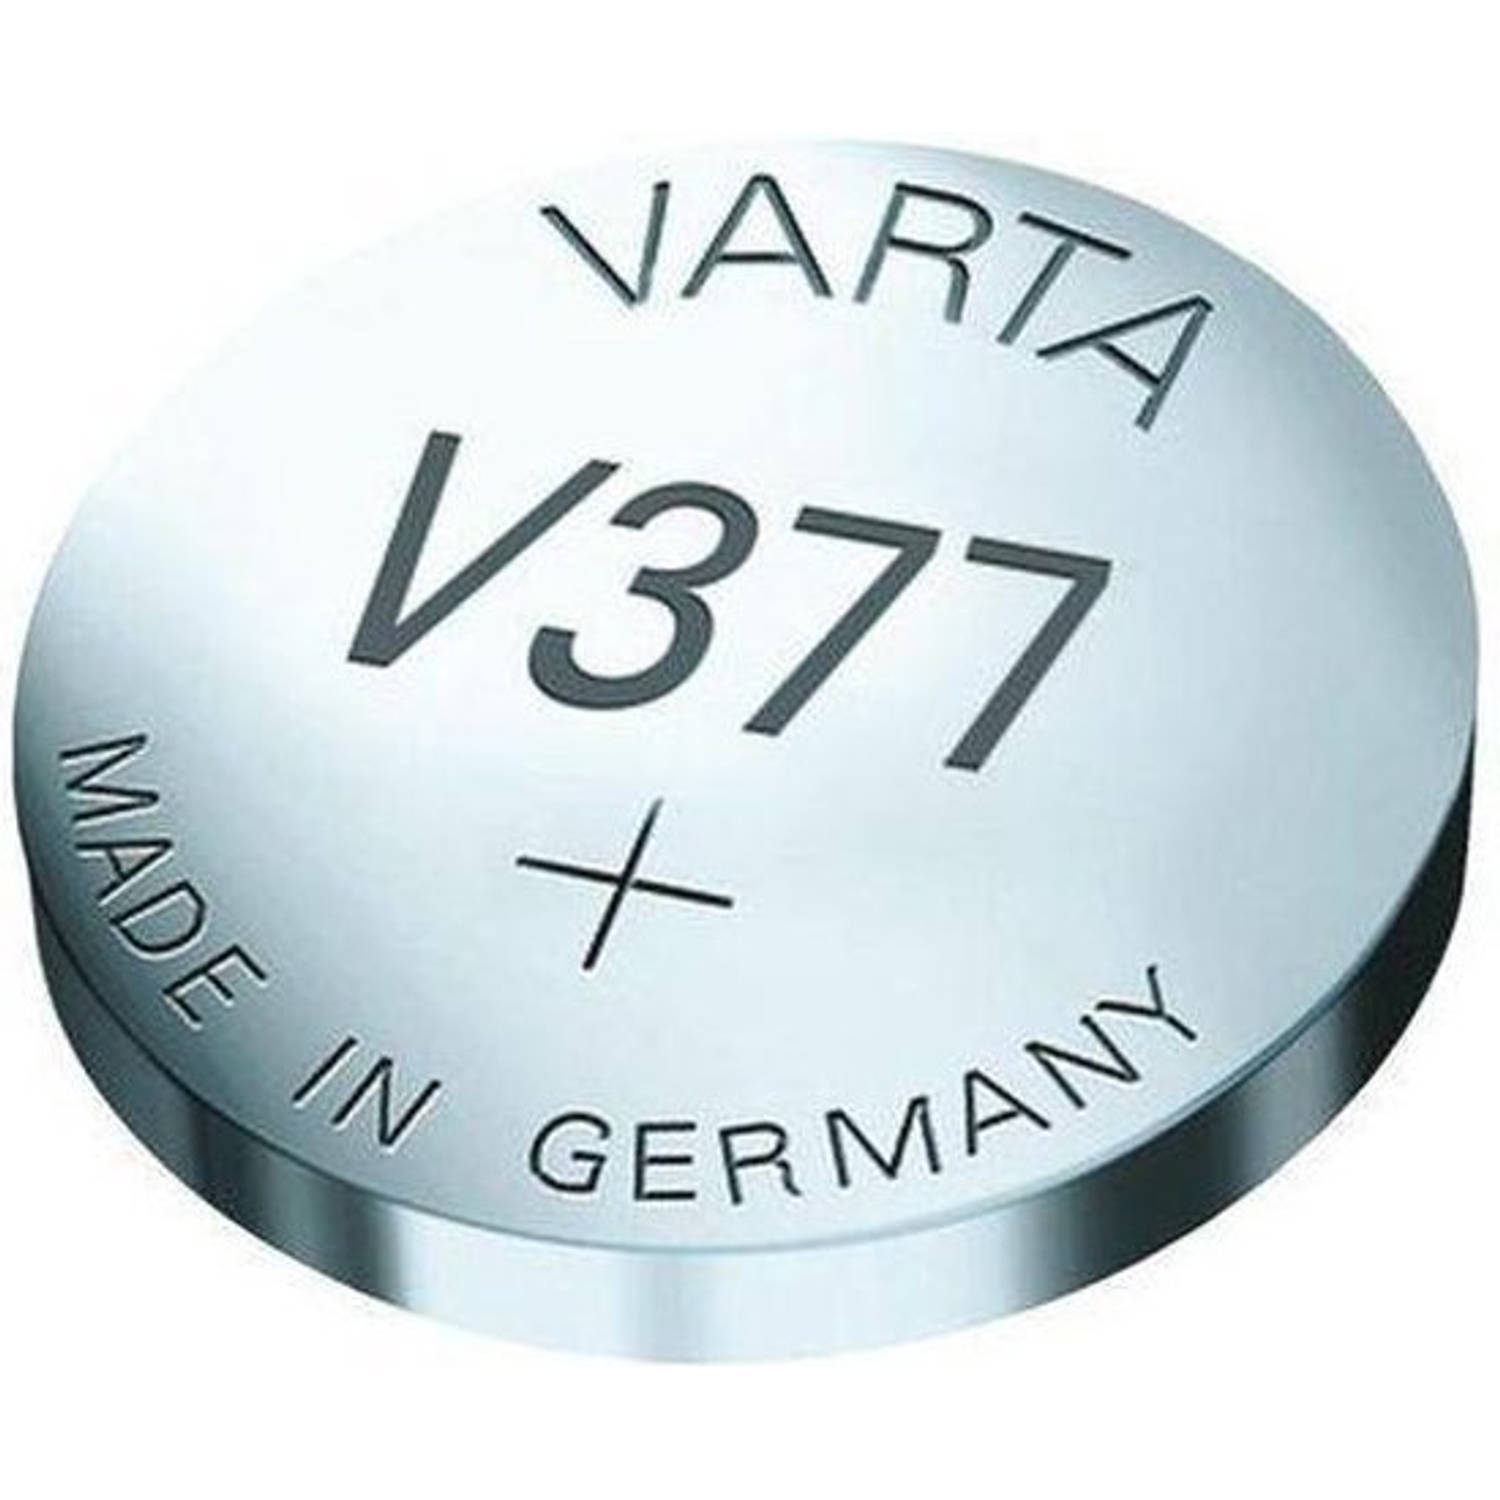 Varta Knoopcel Batterij V377 Horloge - Per stuk